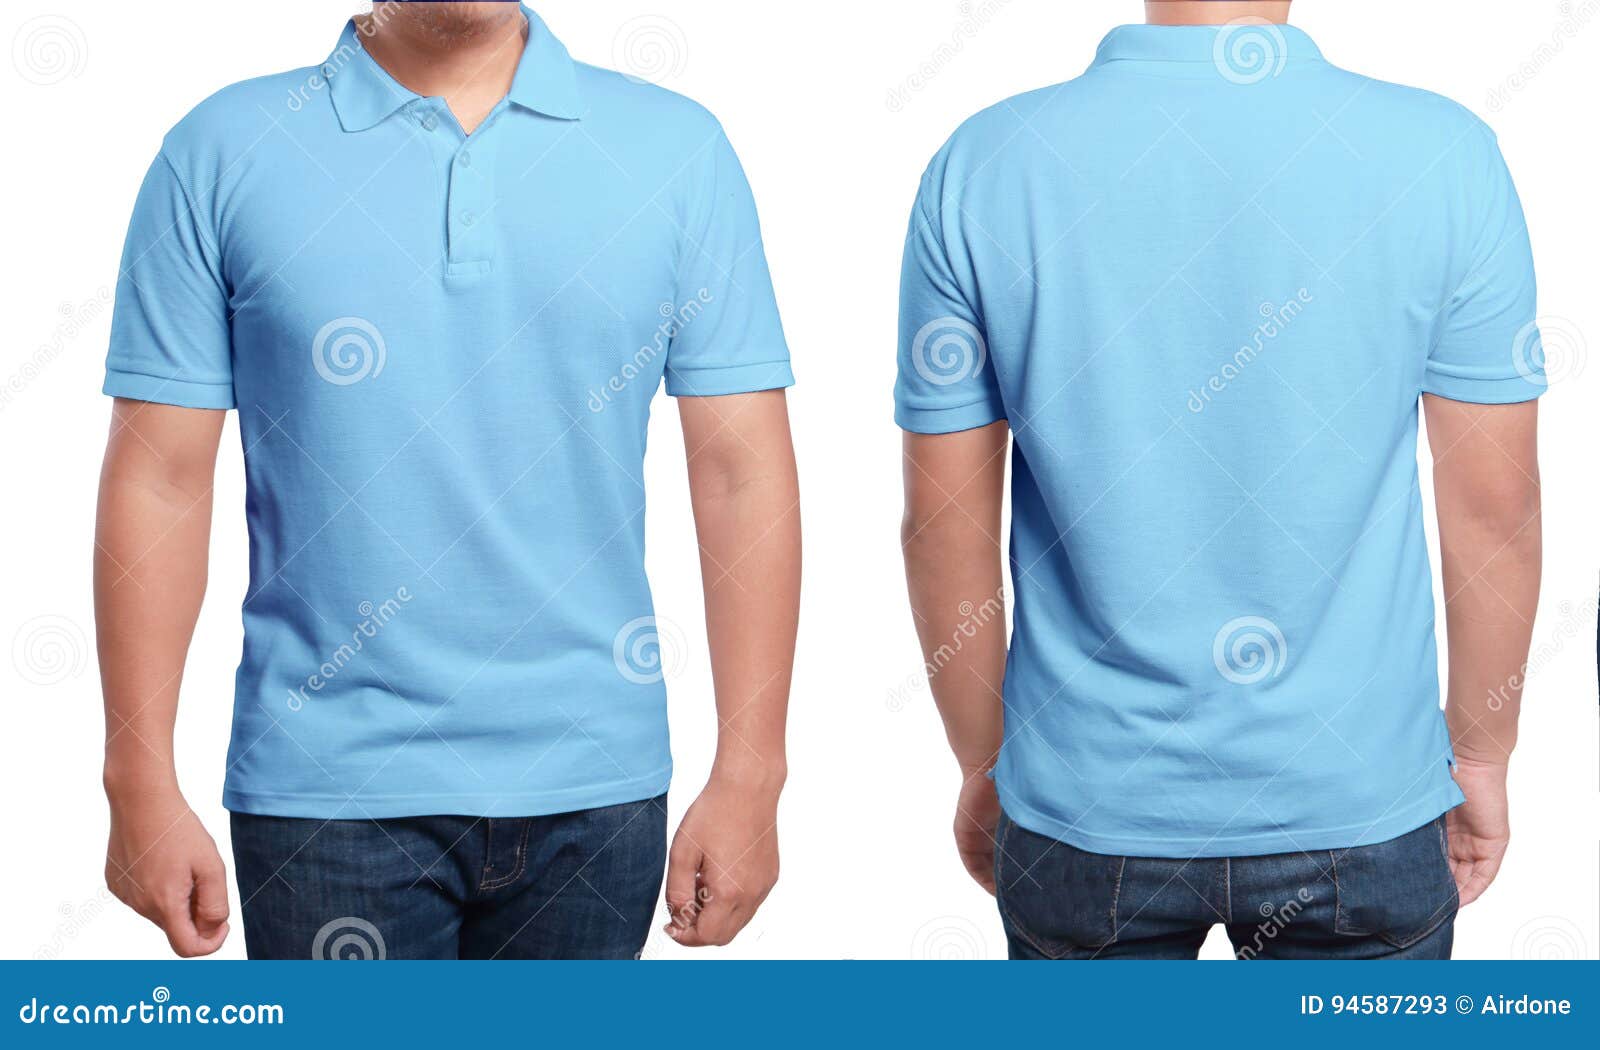 plain navy blue polo shirt back